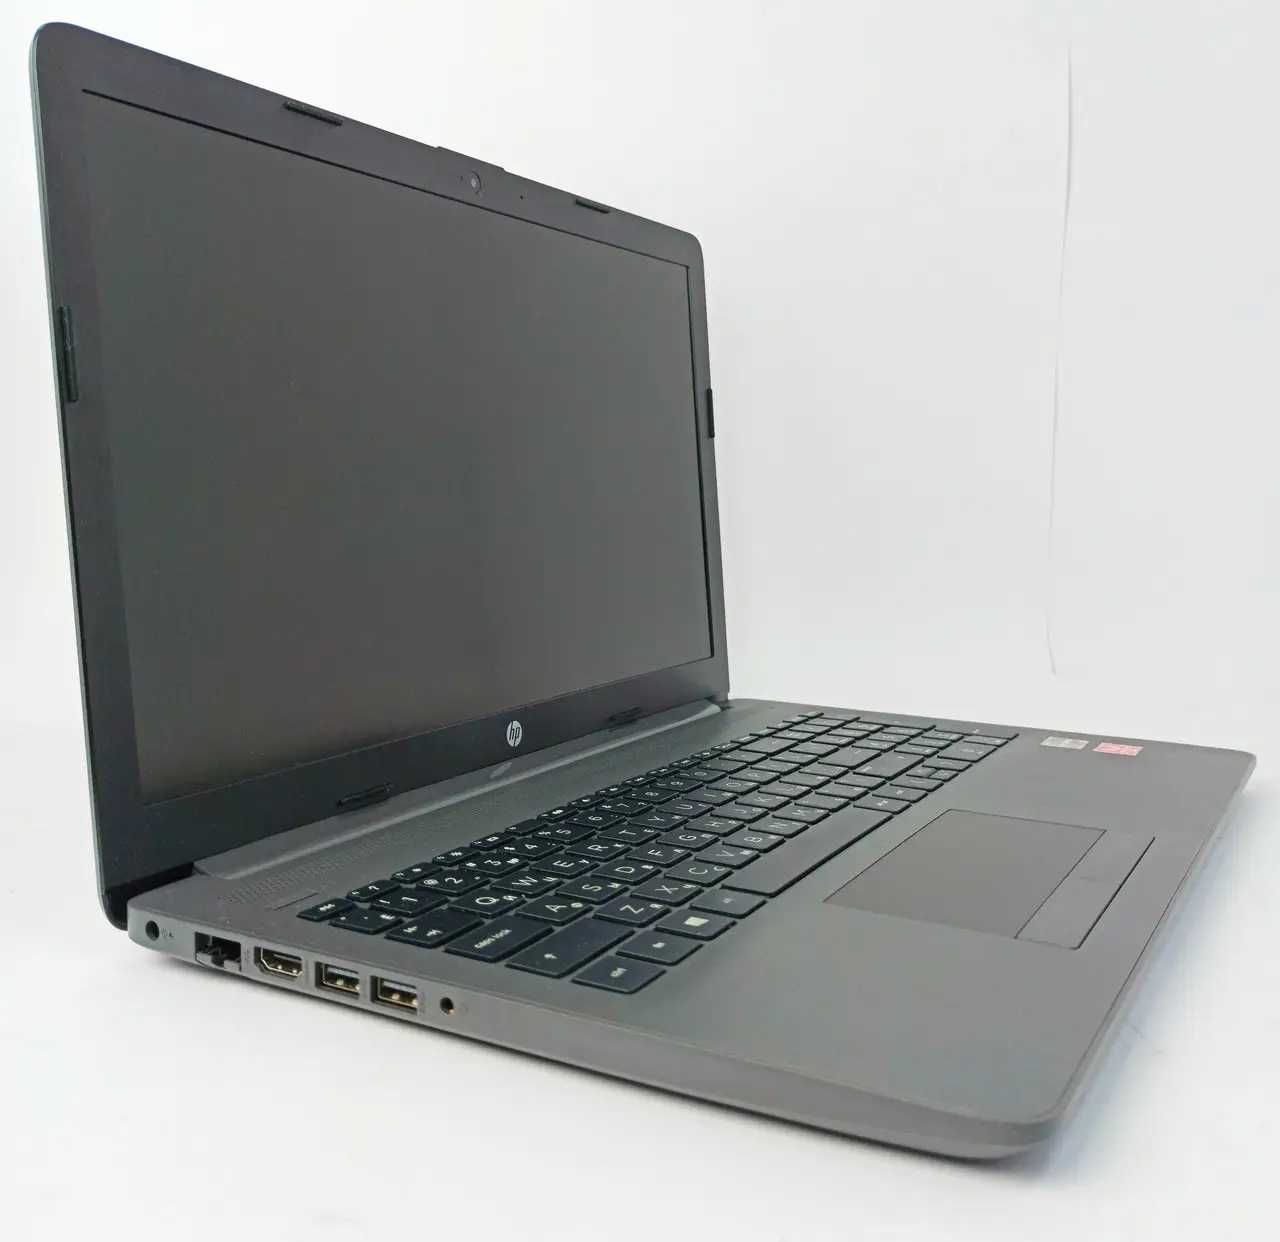 HP 250 G7 SilverBook FULL HD 1920х1080, 4GB, 1TB. Почти новый, срочно!